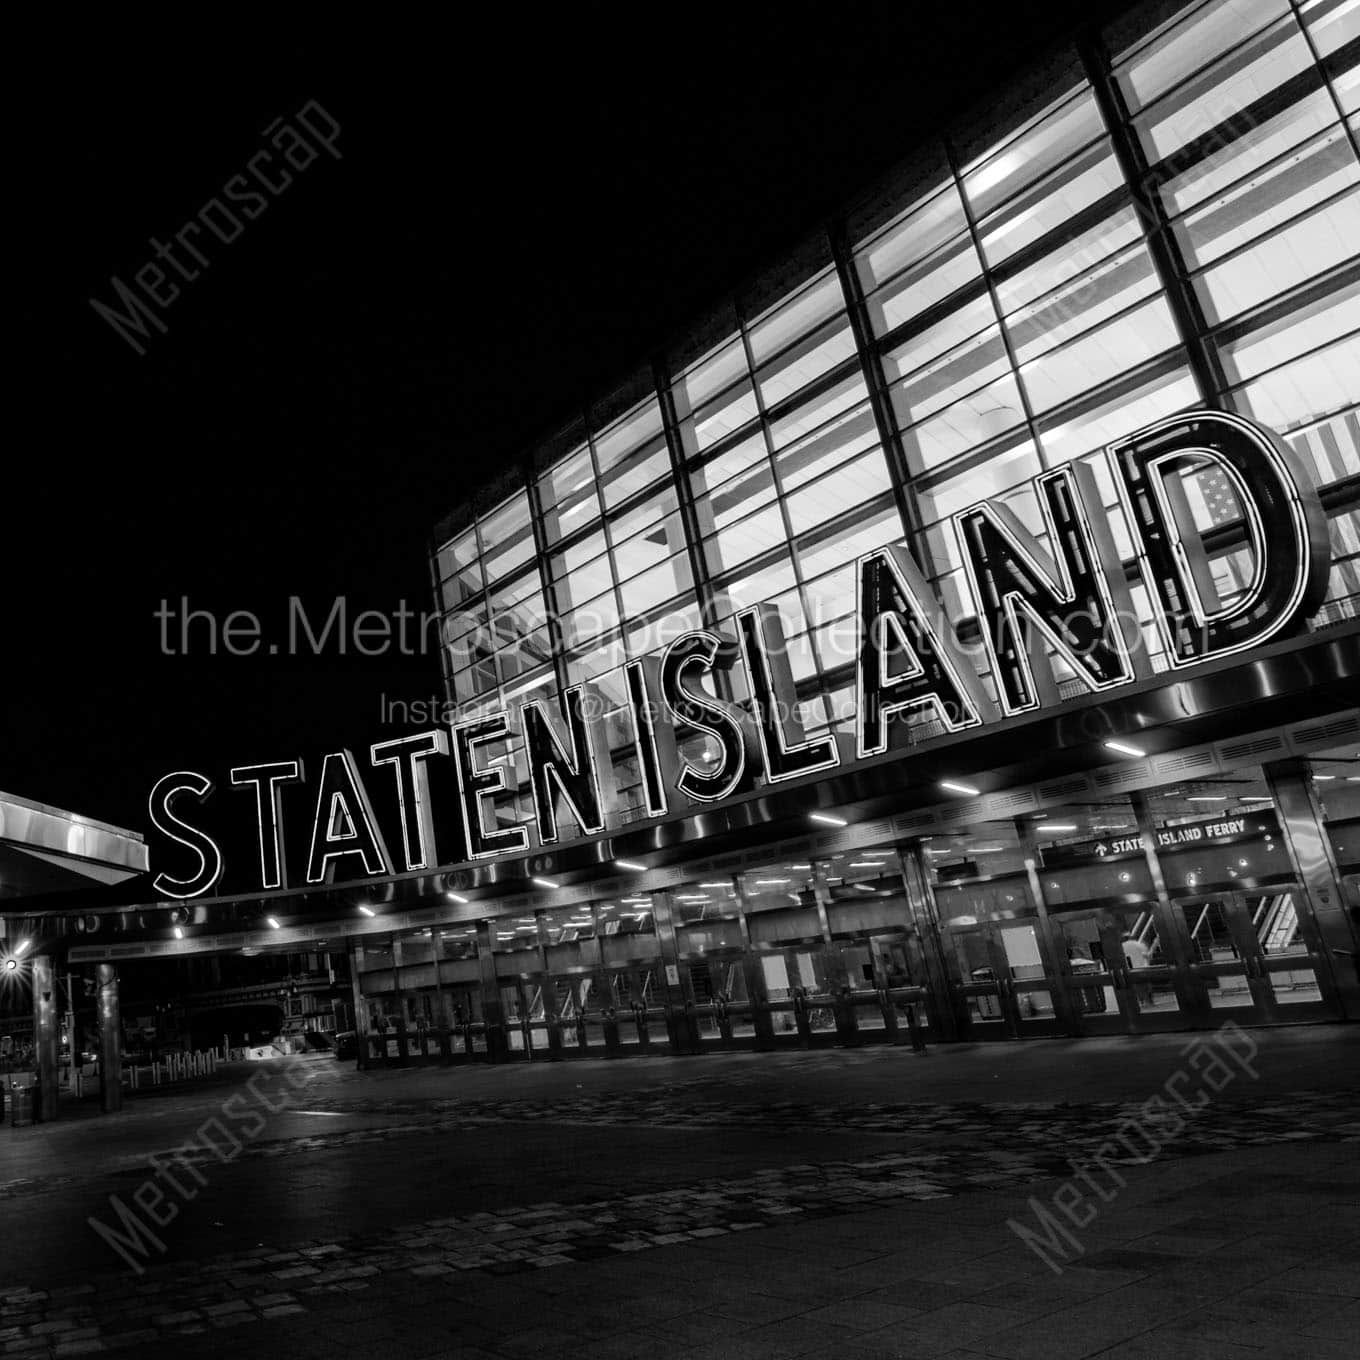 staten island ferry station Black & White Wall Art